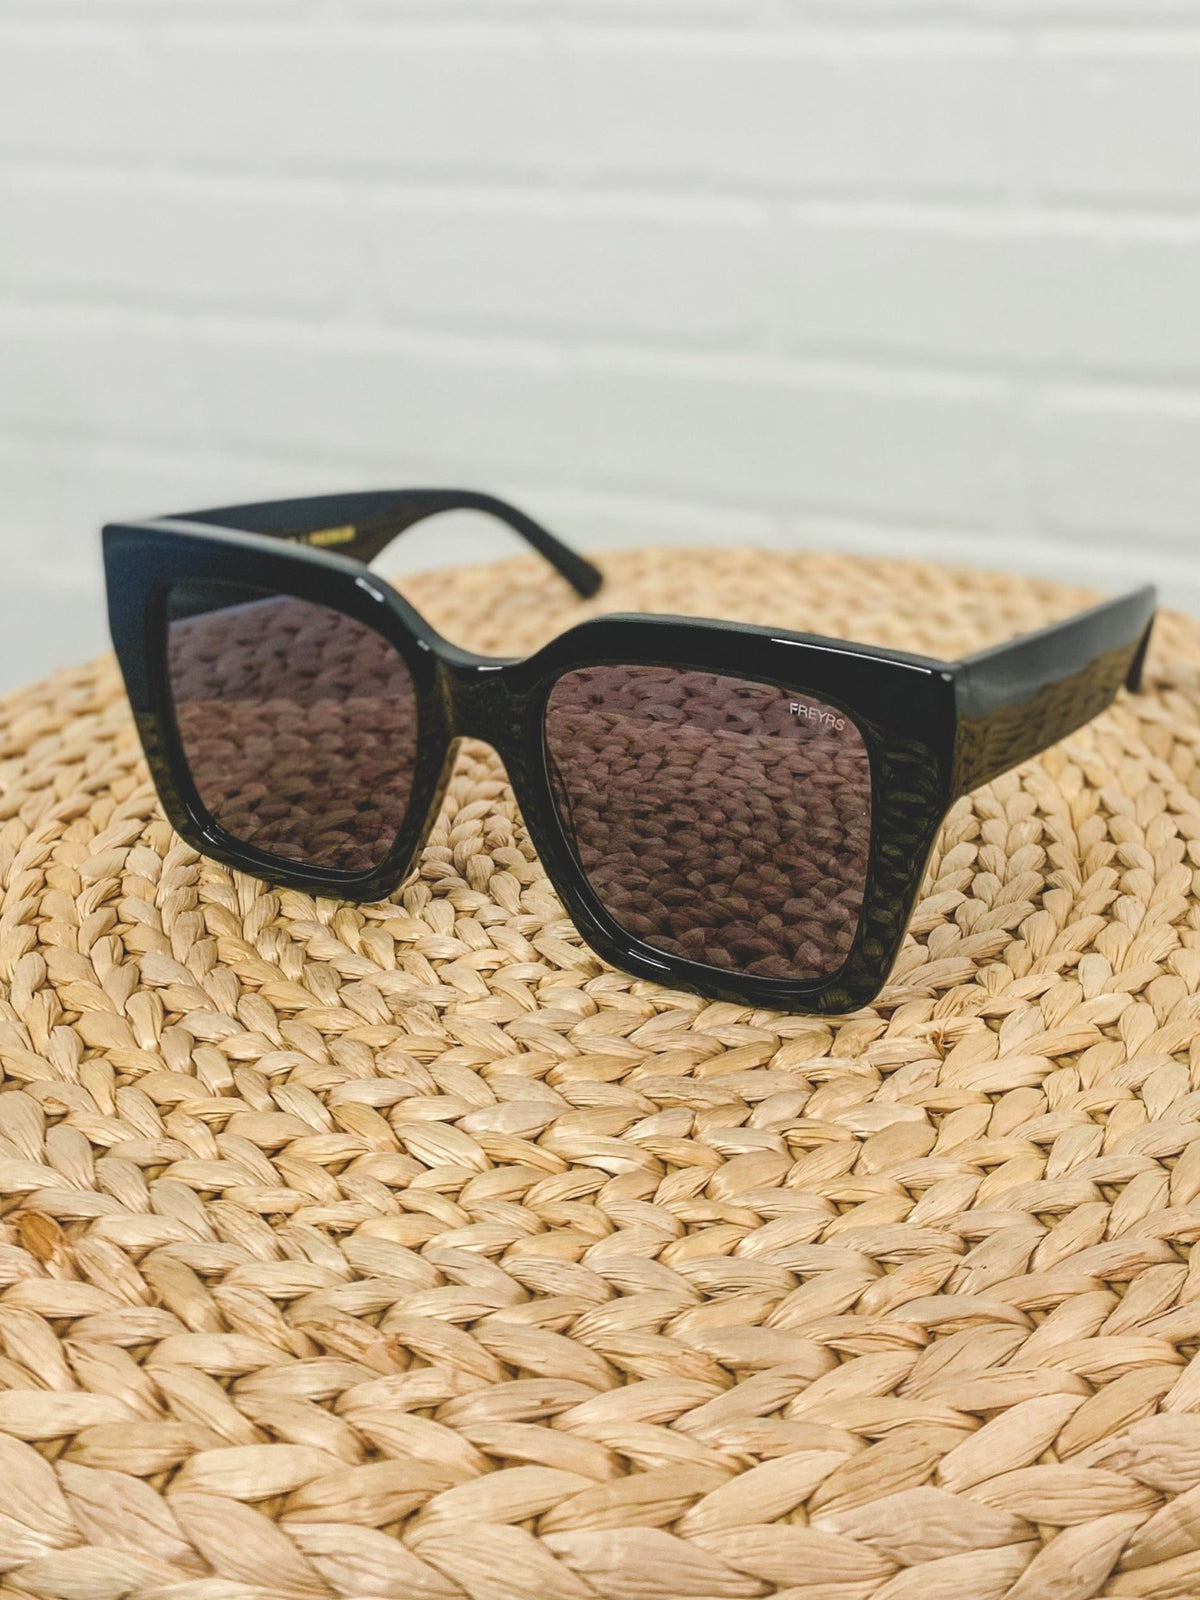 Freyrs Bon Chic sunglasses black - Stylish Sunglasses - Trendy Glasses at Lush Fashion Lounge Boutique in Oklahoma